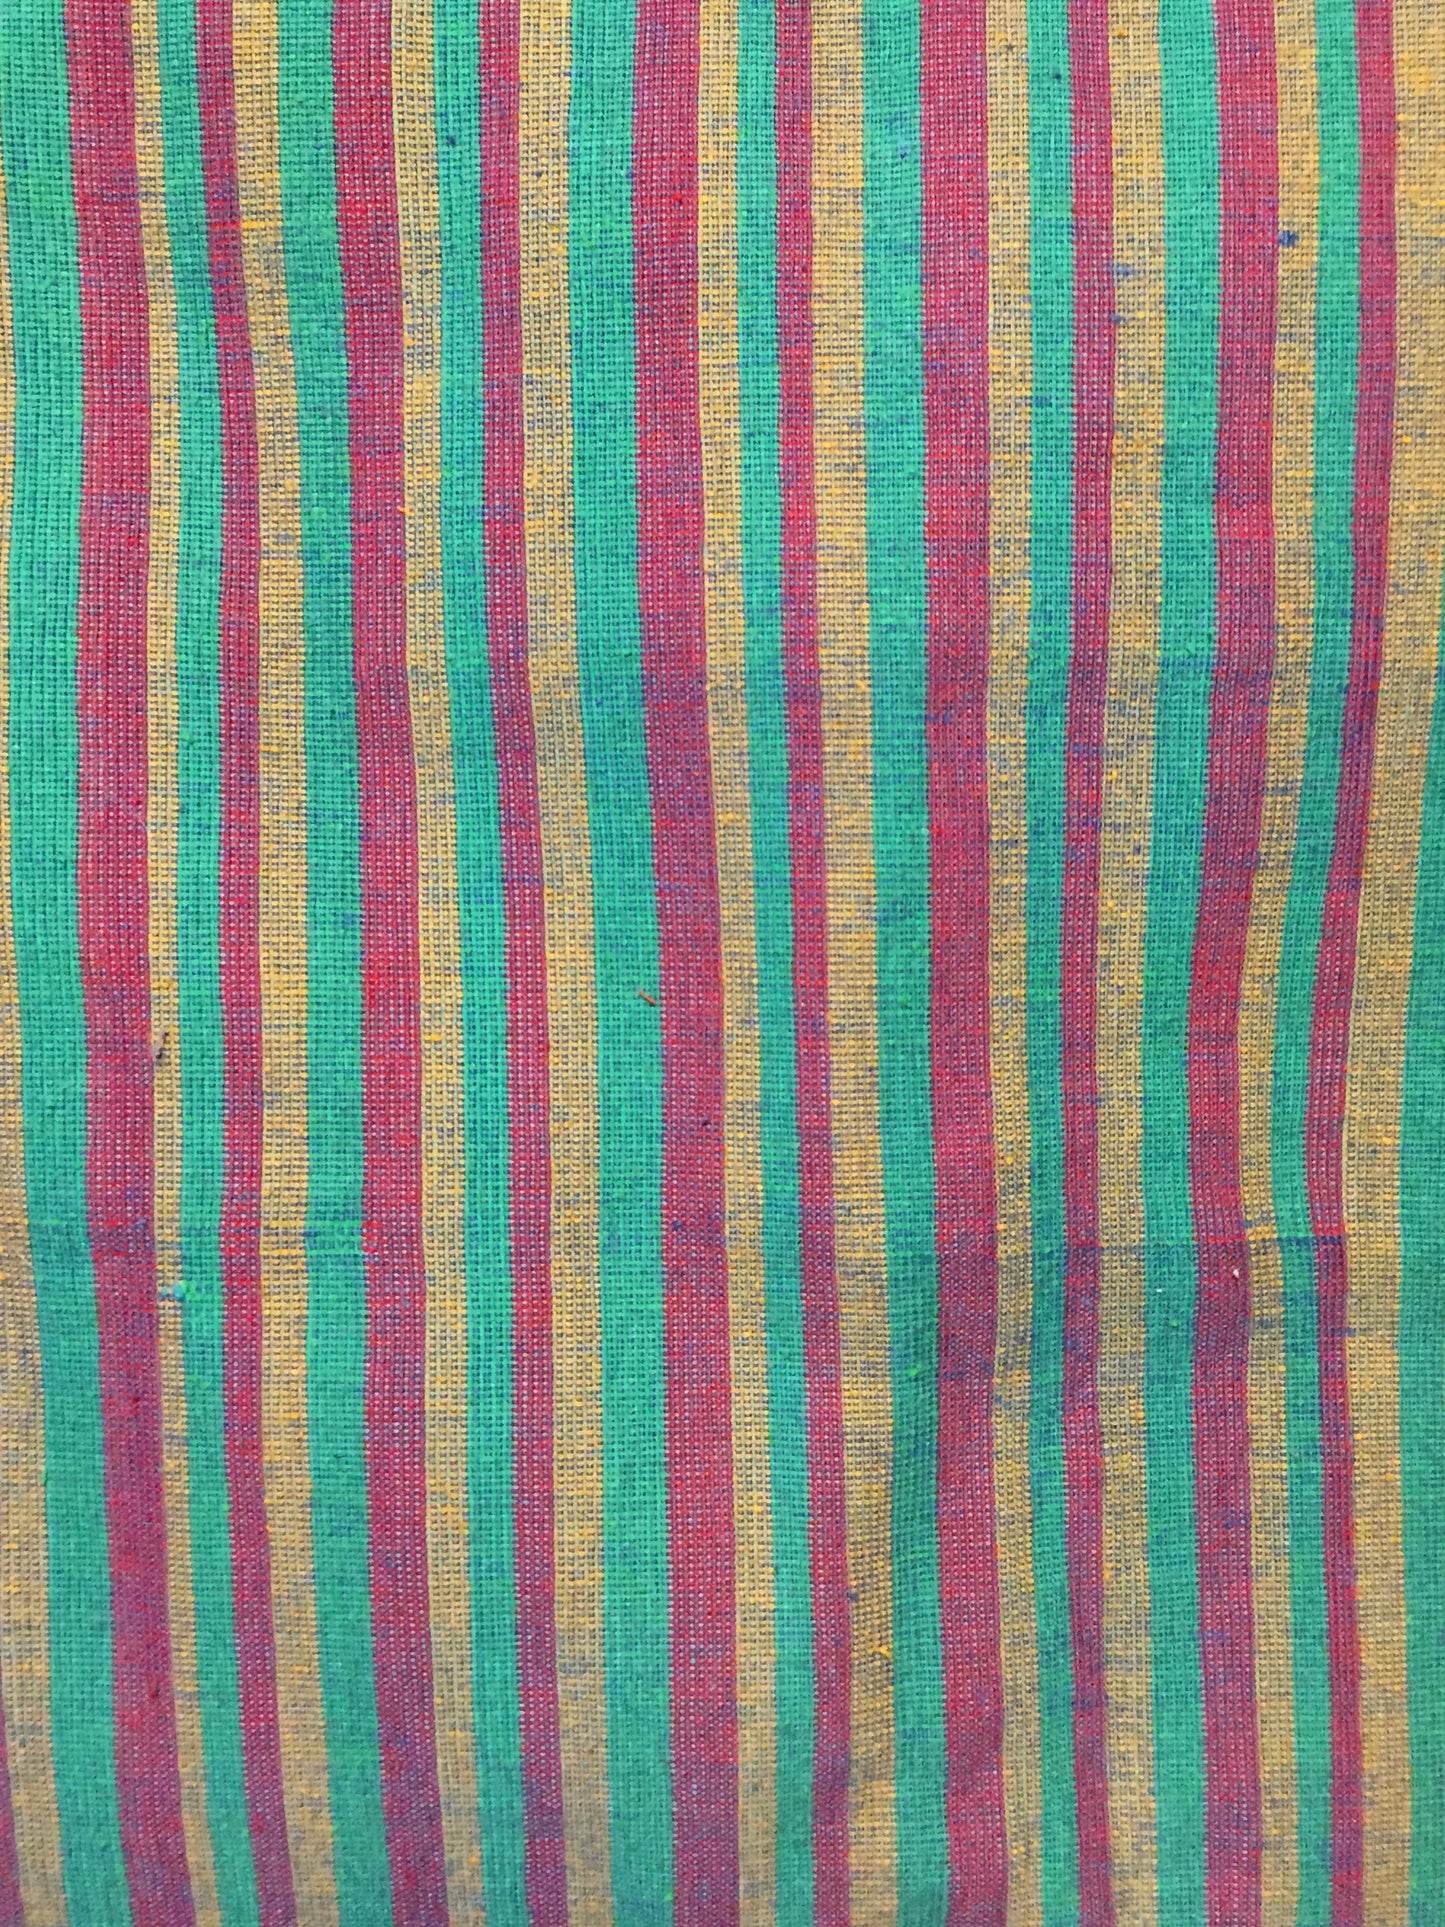 Handwoven Egyptian Cotton Cushion Cover - Striped - Dandarah